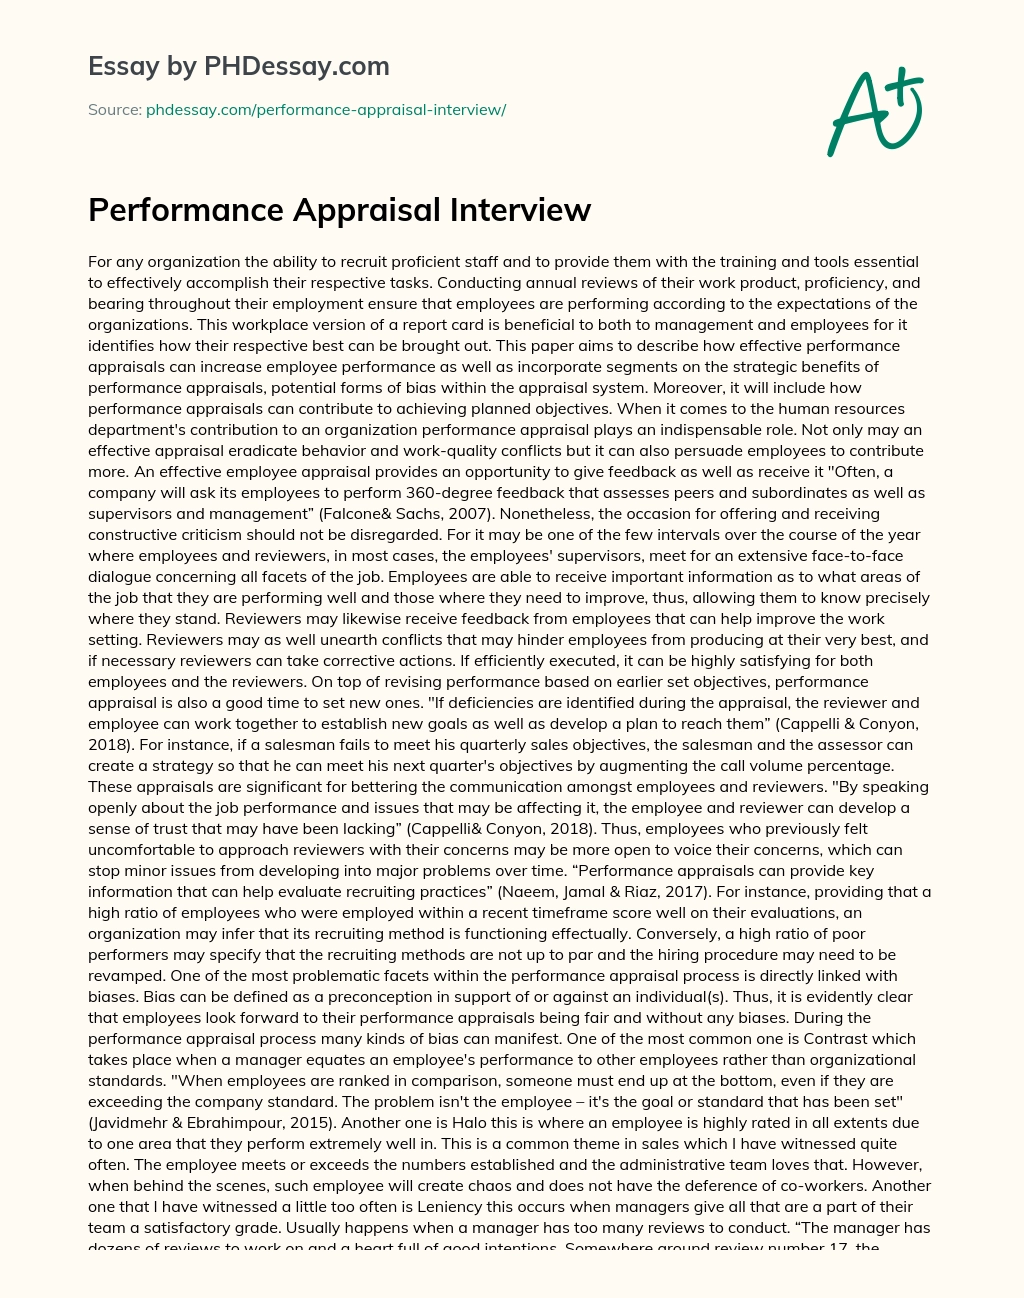 essay in performance appraisal